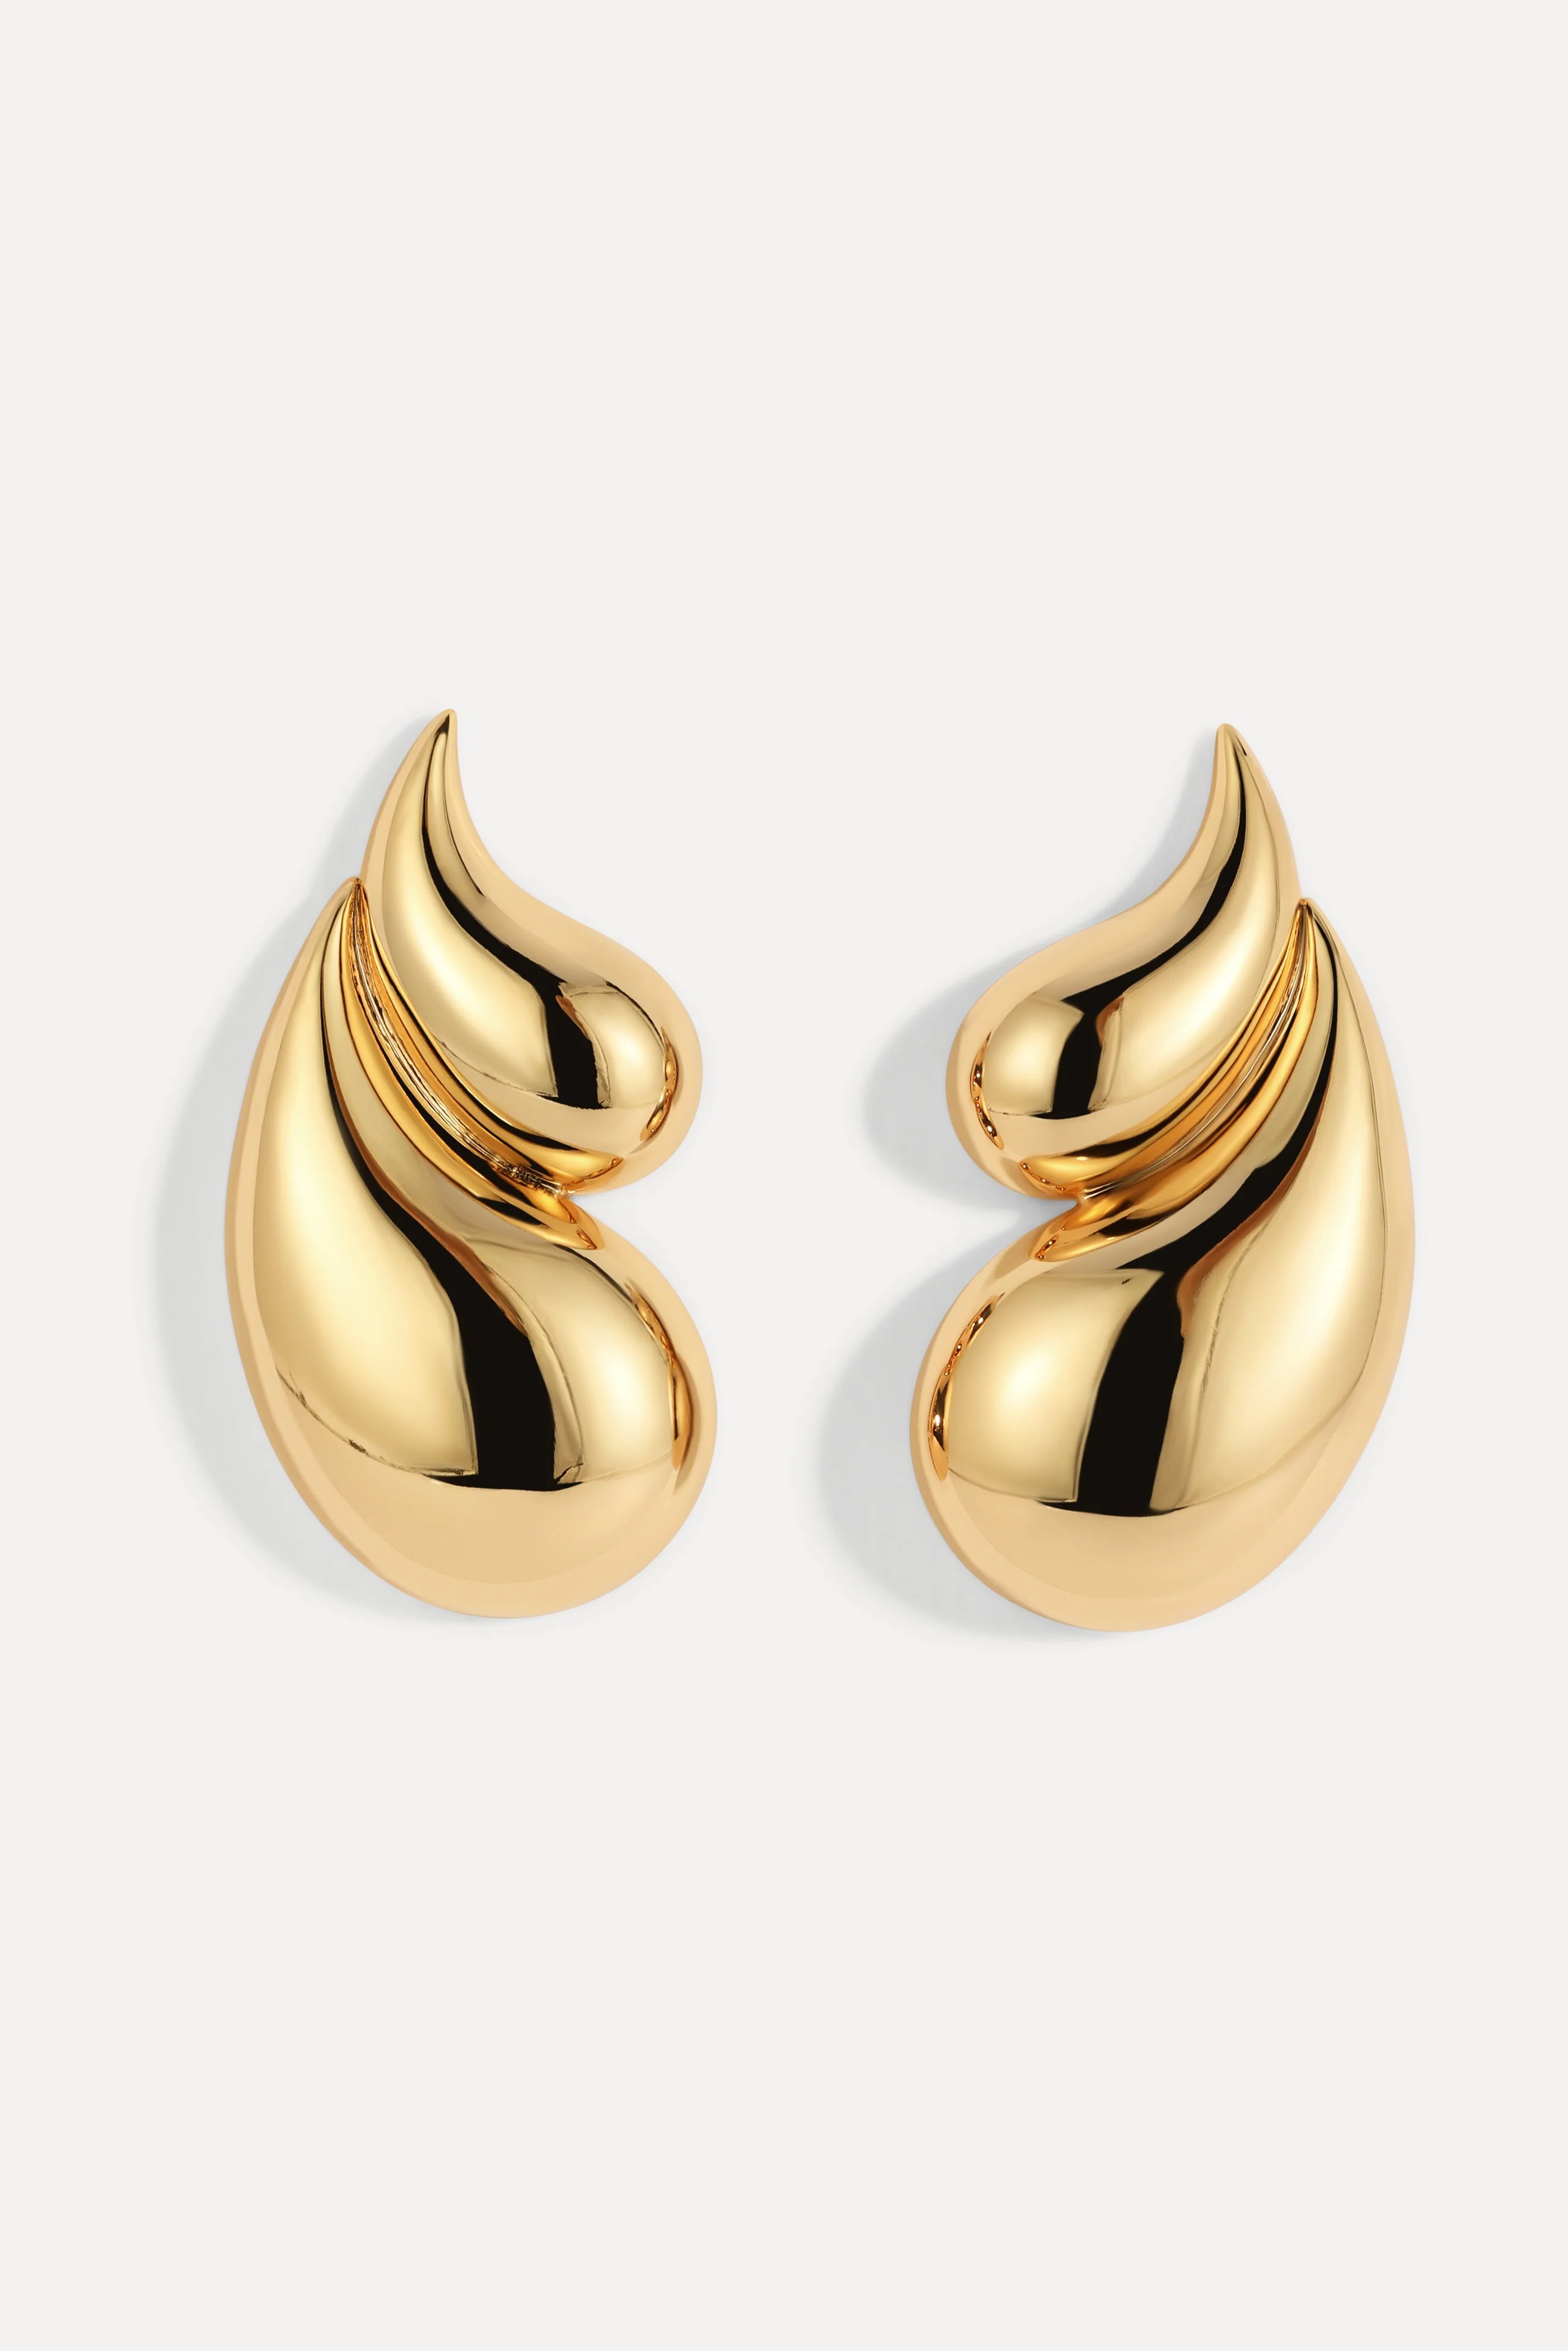 Sade Earrings | Lili Claspe